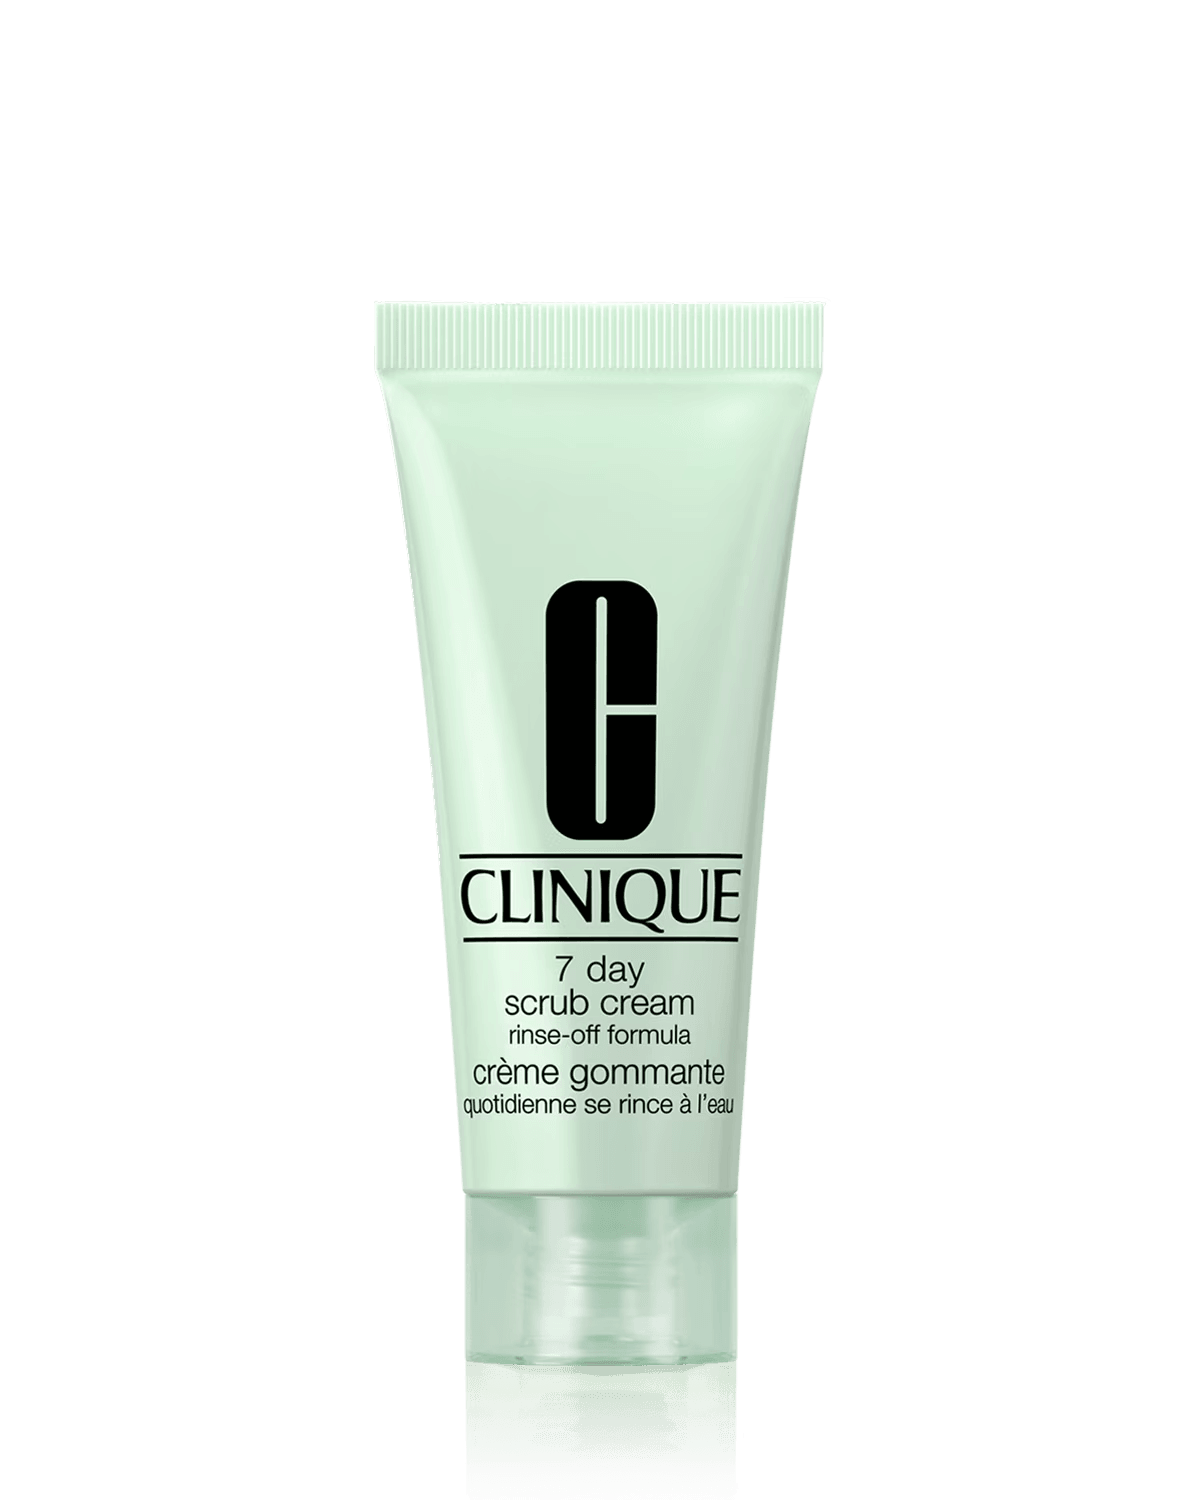 Крем-скраб Clinique 7 Day Rinse-Off Formula, 15 мл clinique крем скраб для лица 7 day scrub cream rinse off formula